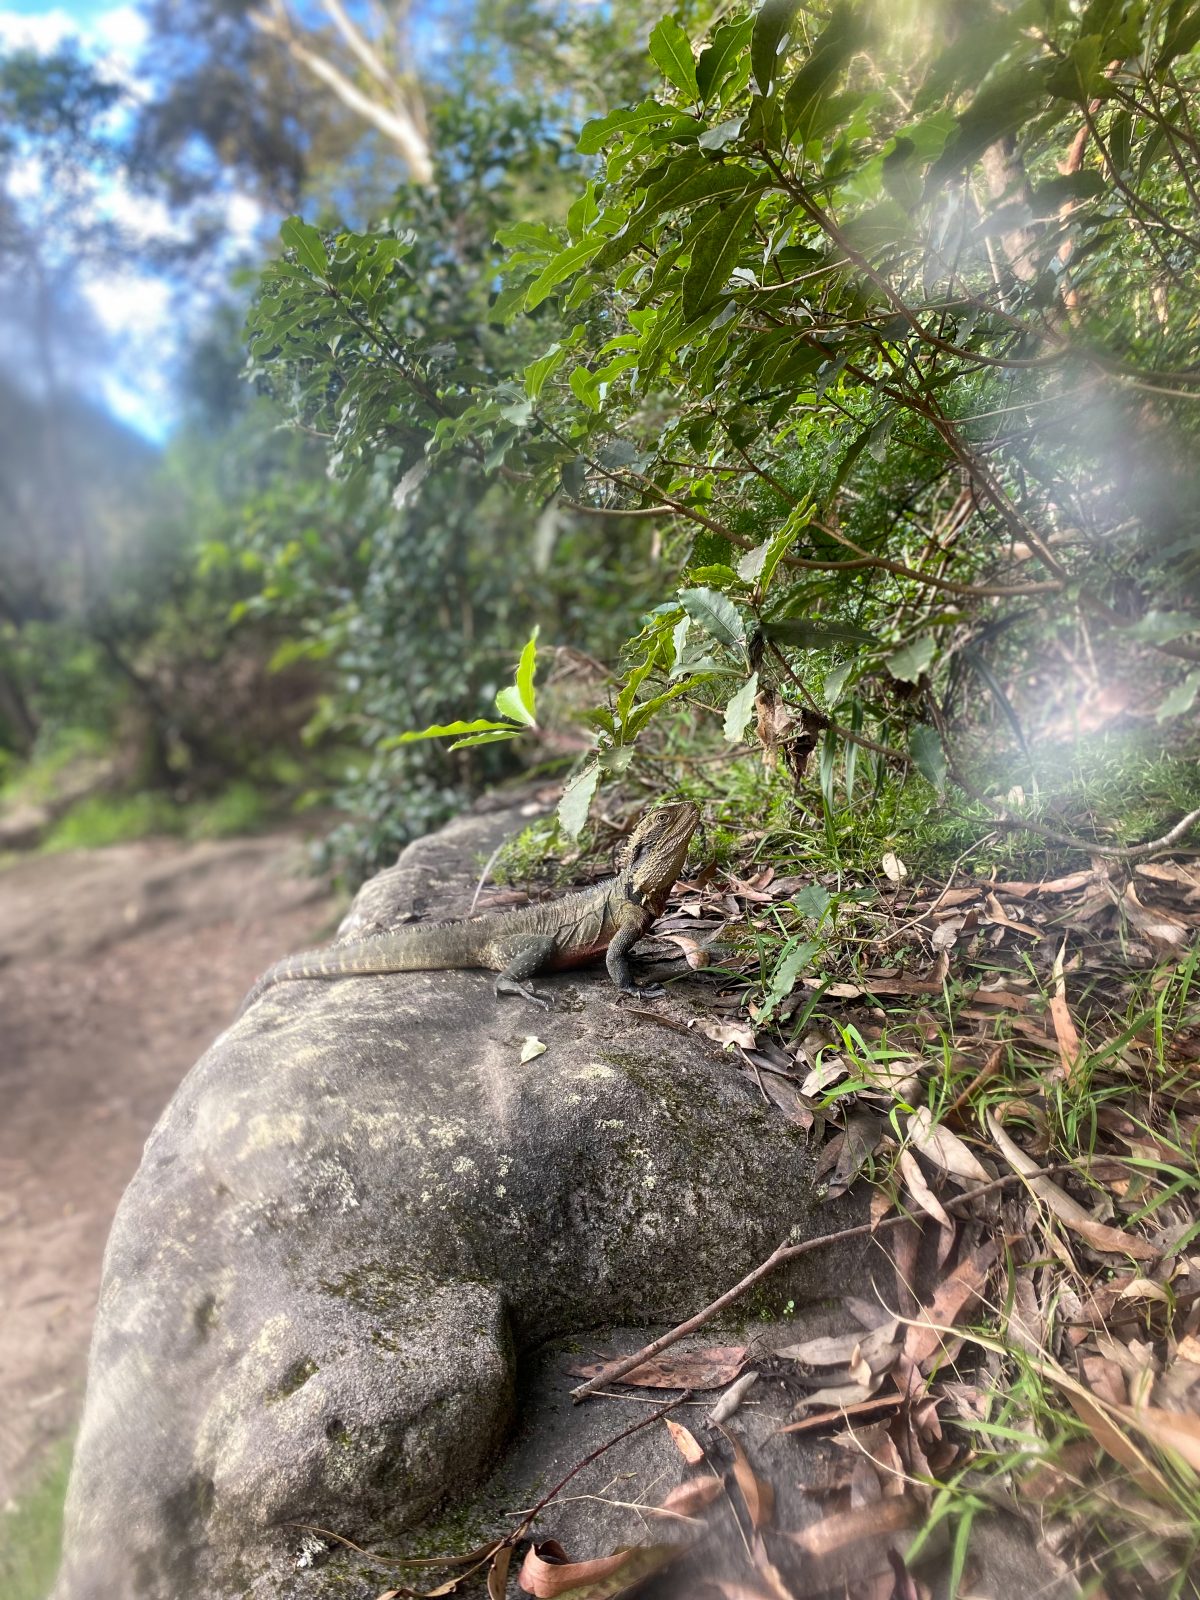 A iguana on a rock. Photo: Tim Ashelford